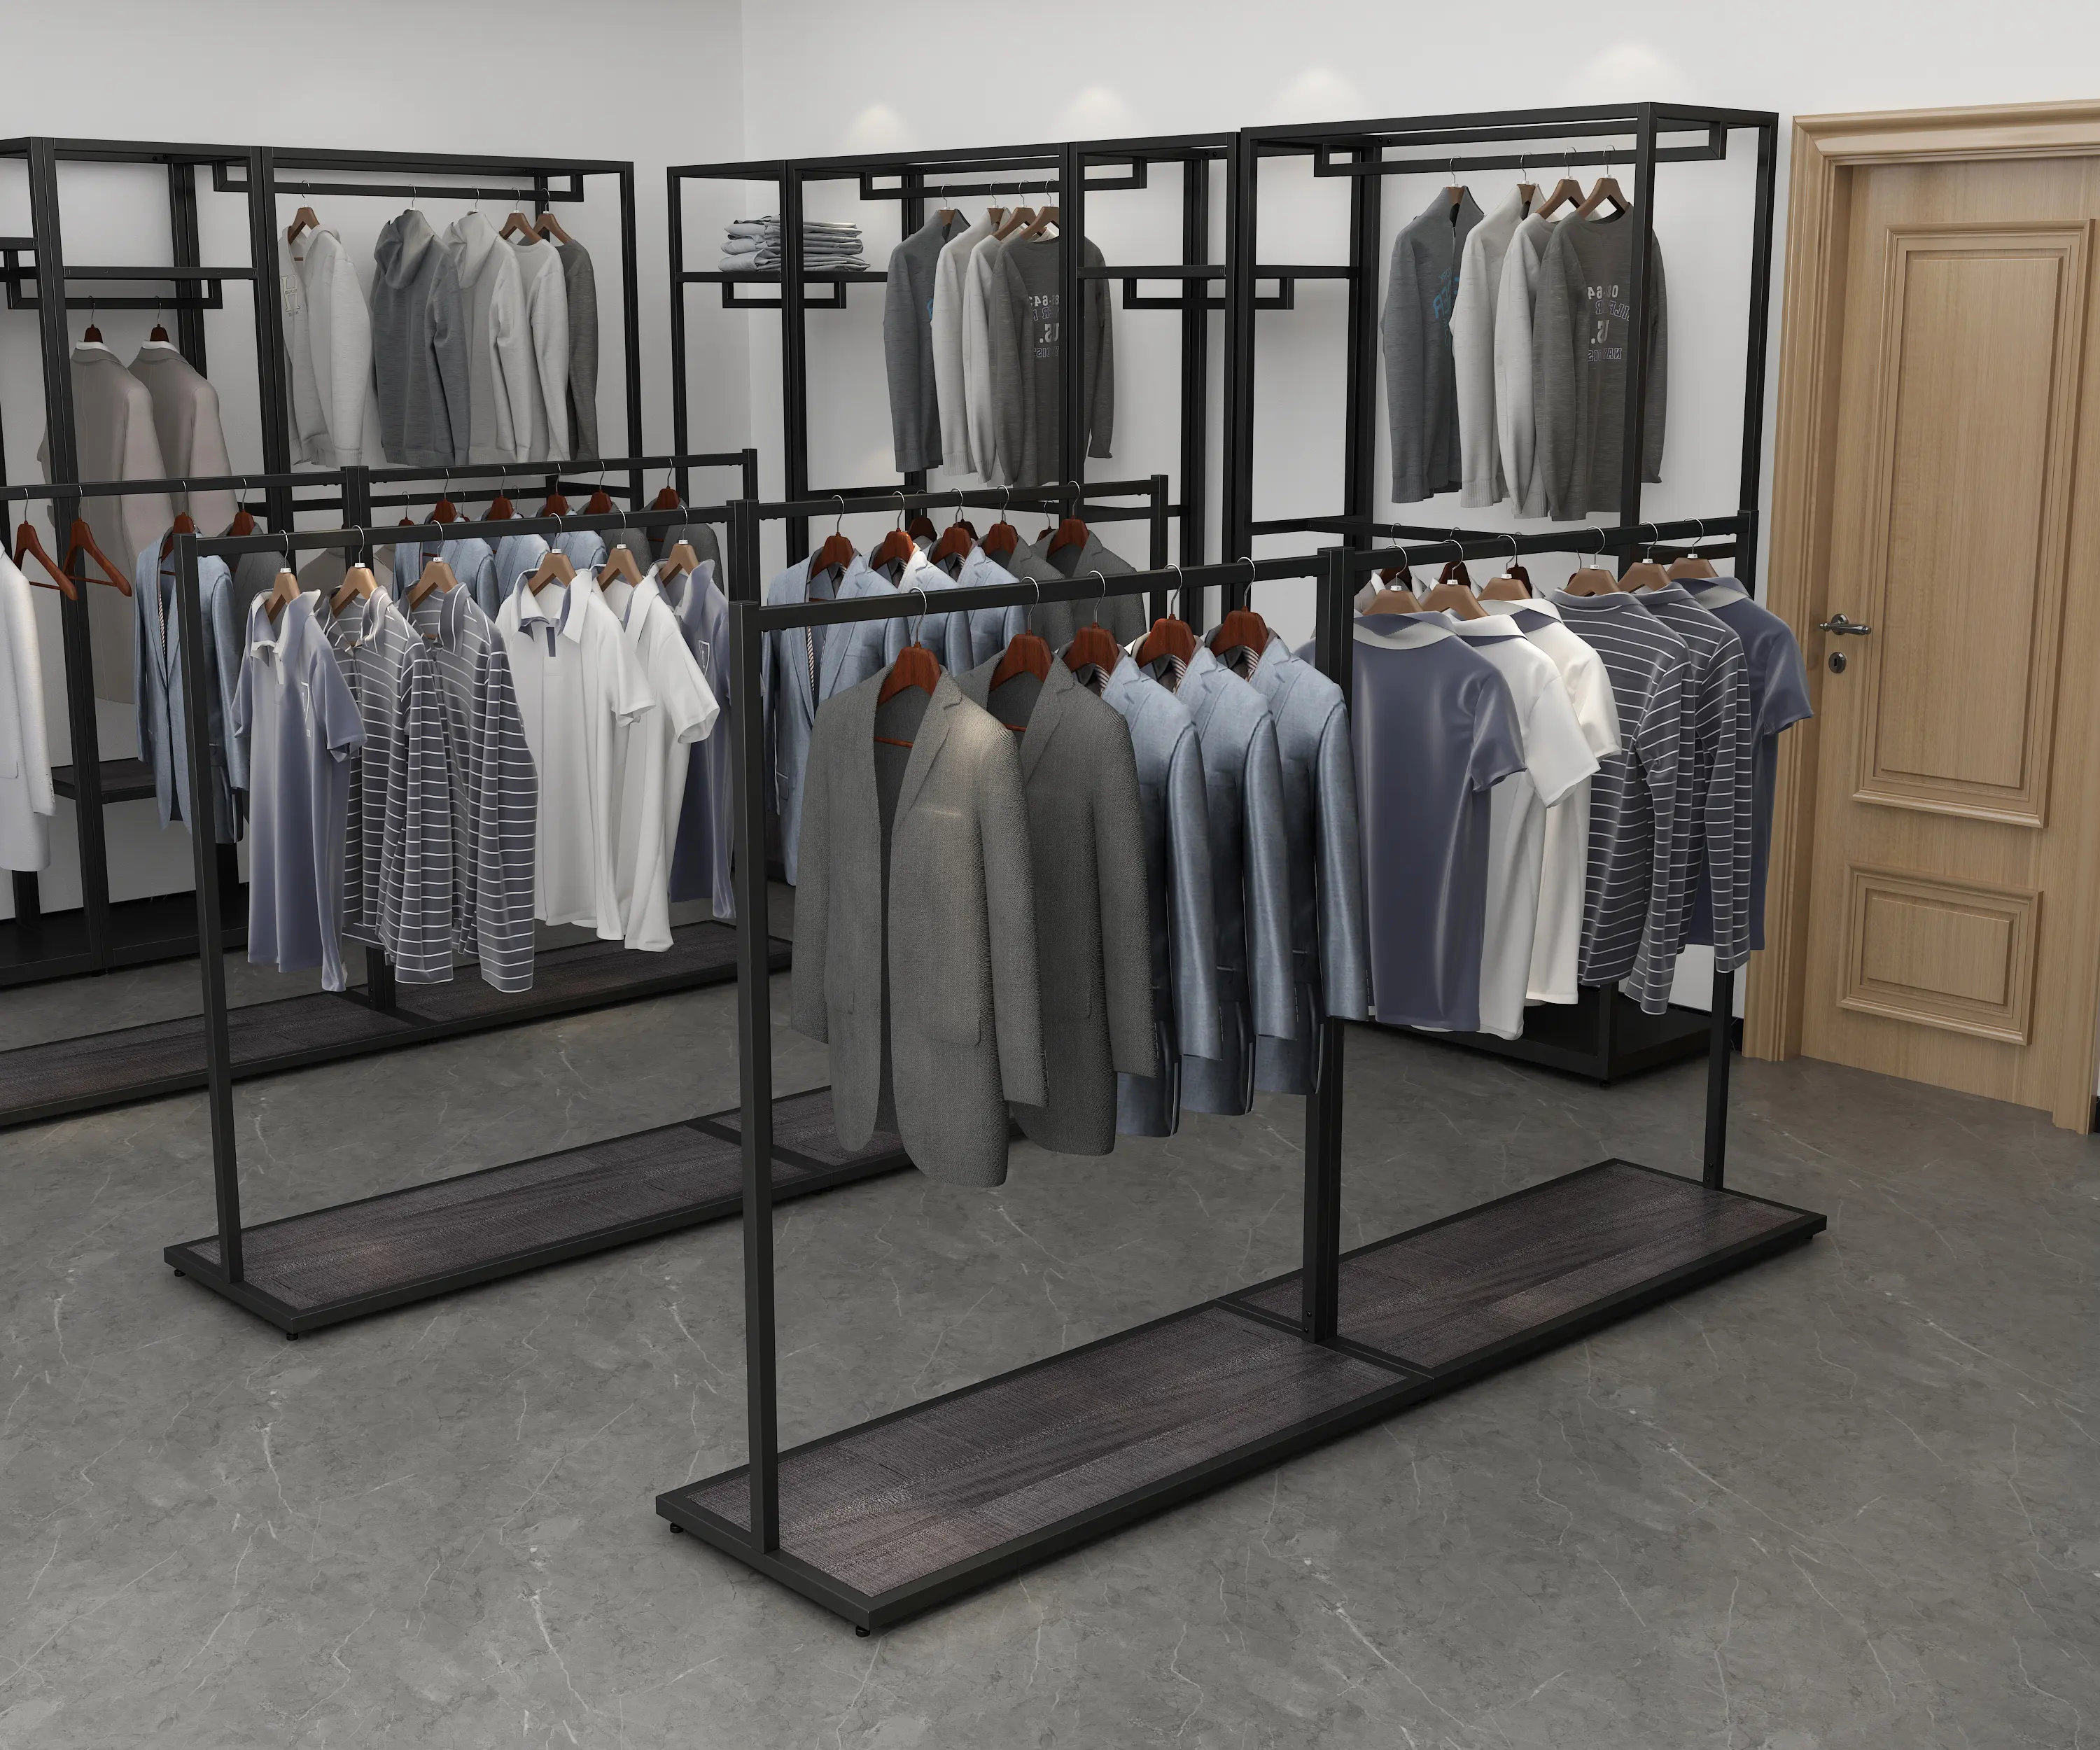 YIHE Customized Interior Design Fashion Retail Clothes Rack Clothing Shop Freestanding Garment Rack For Bottom Shelves